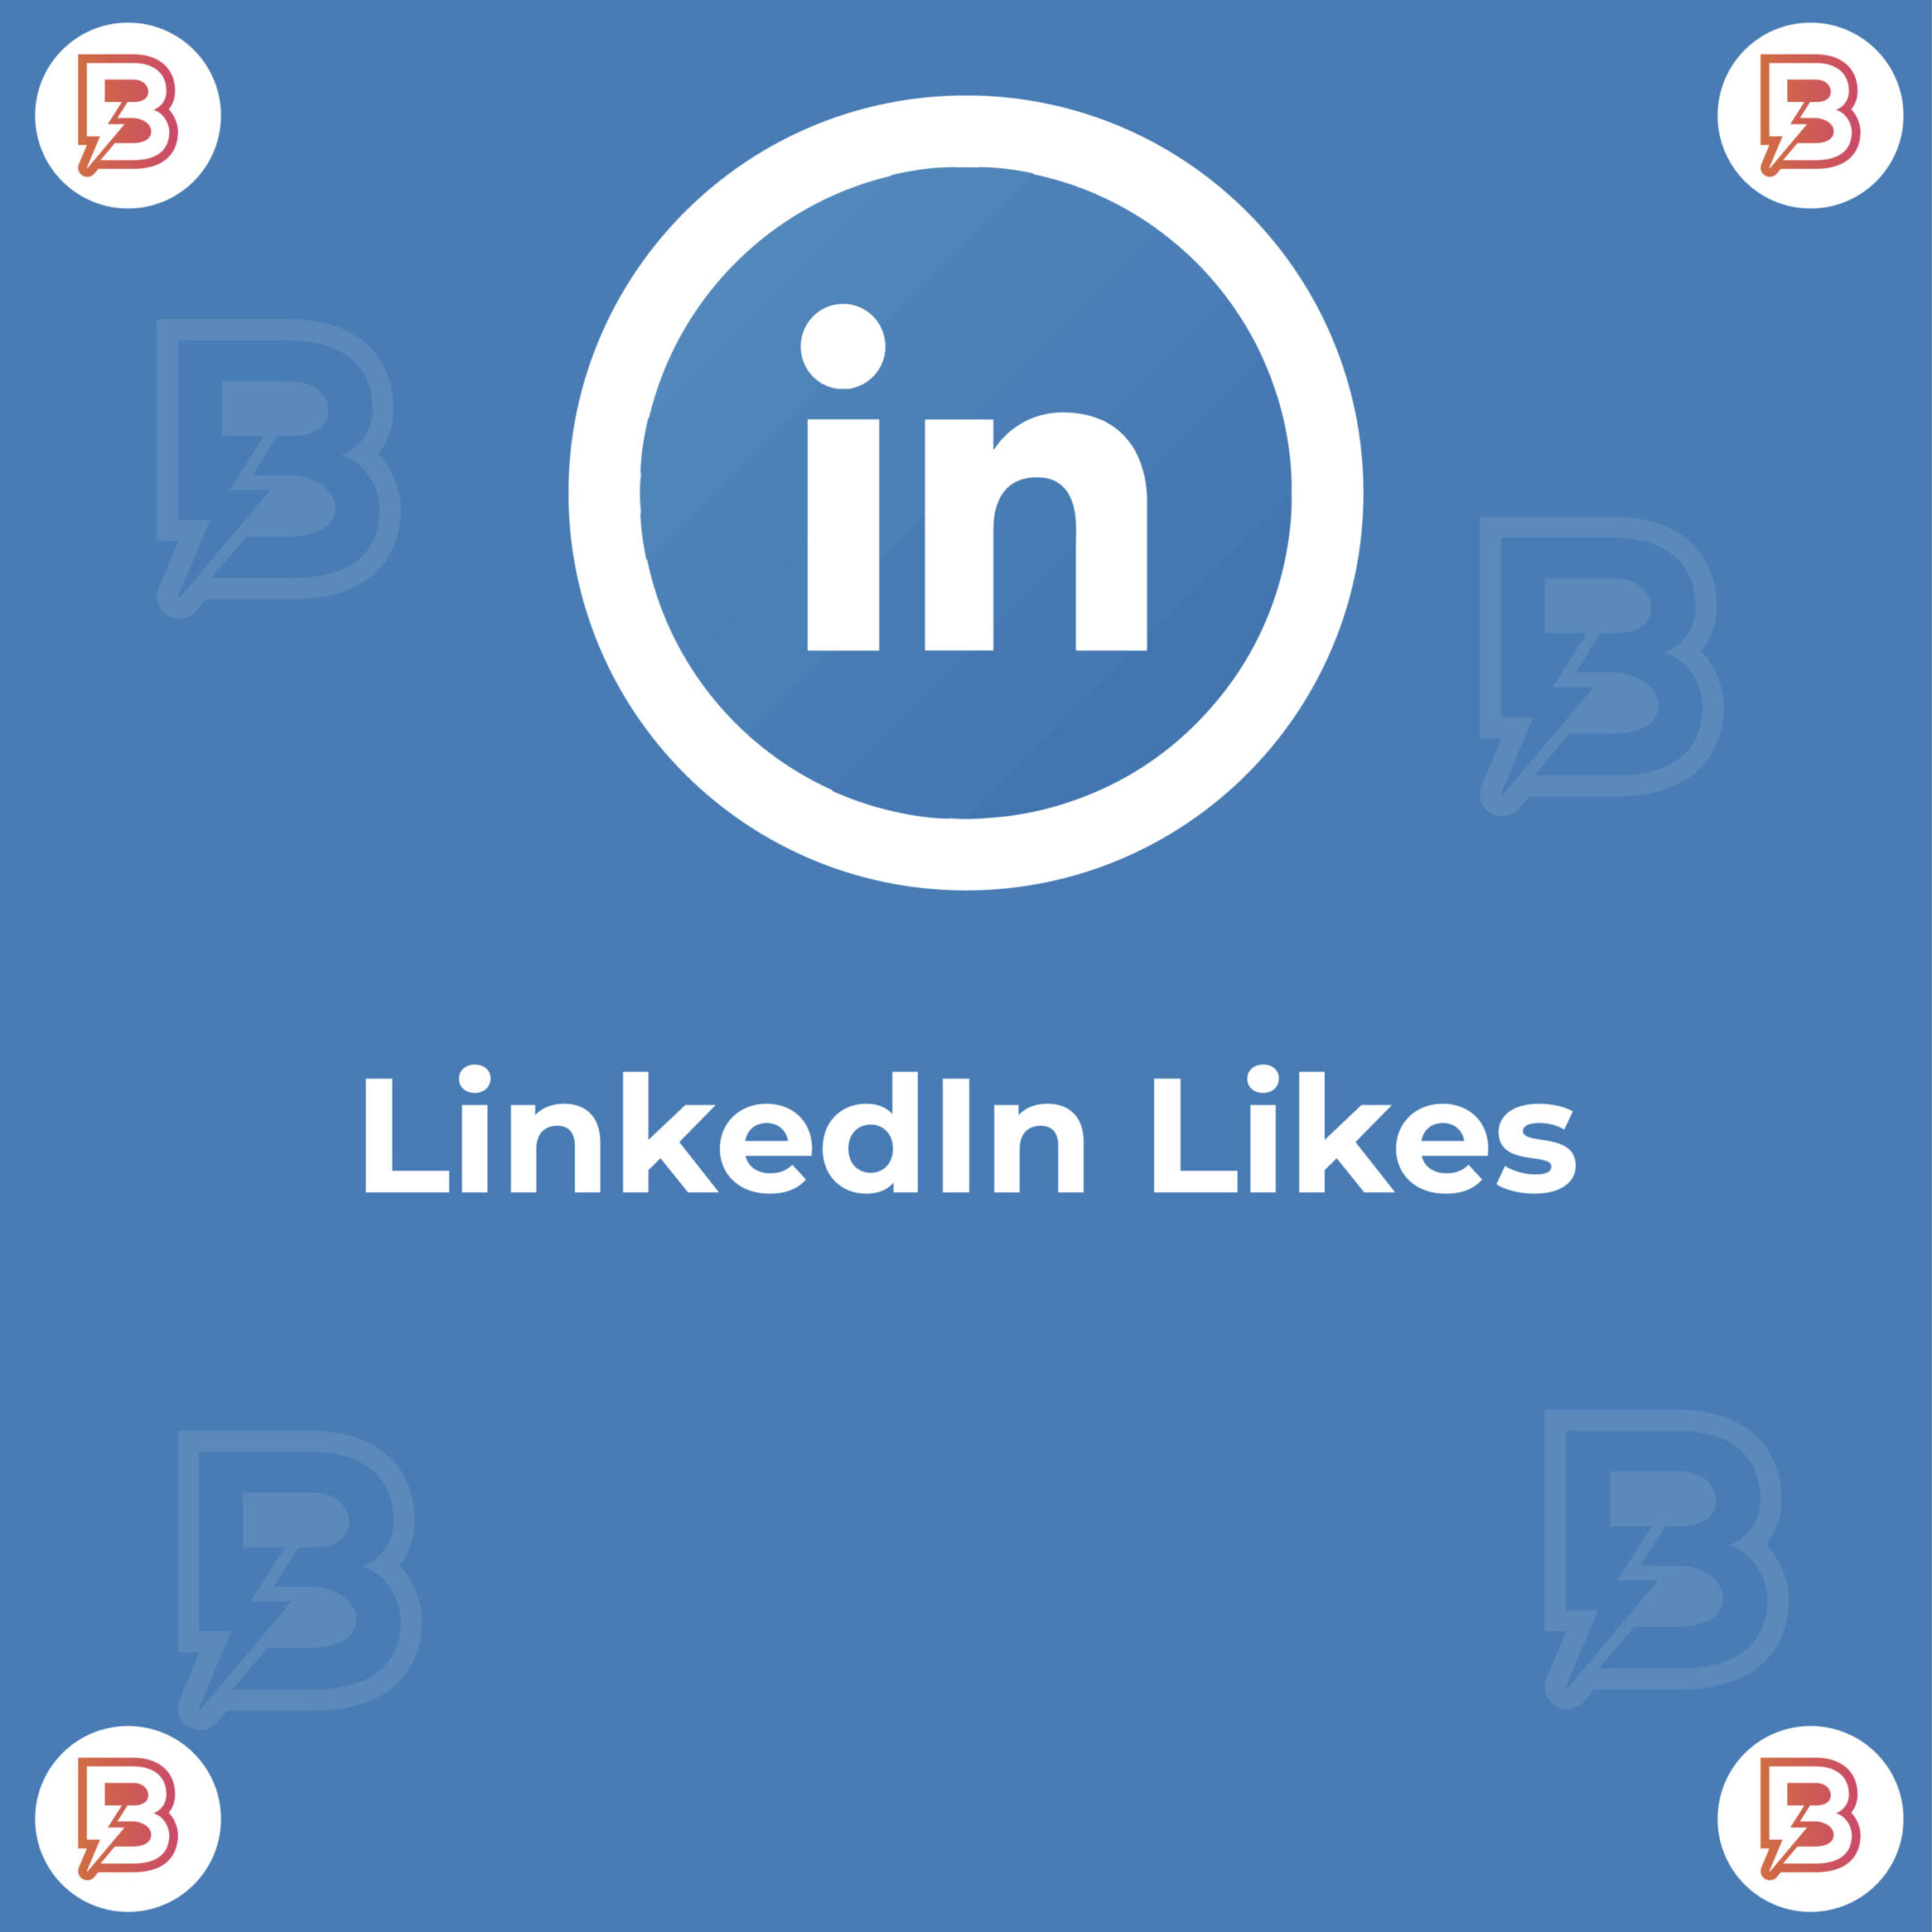 Buy LinkedIn Likes